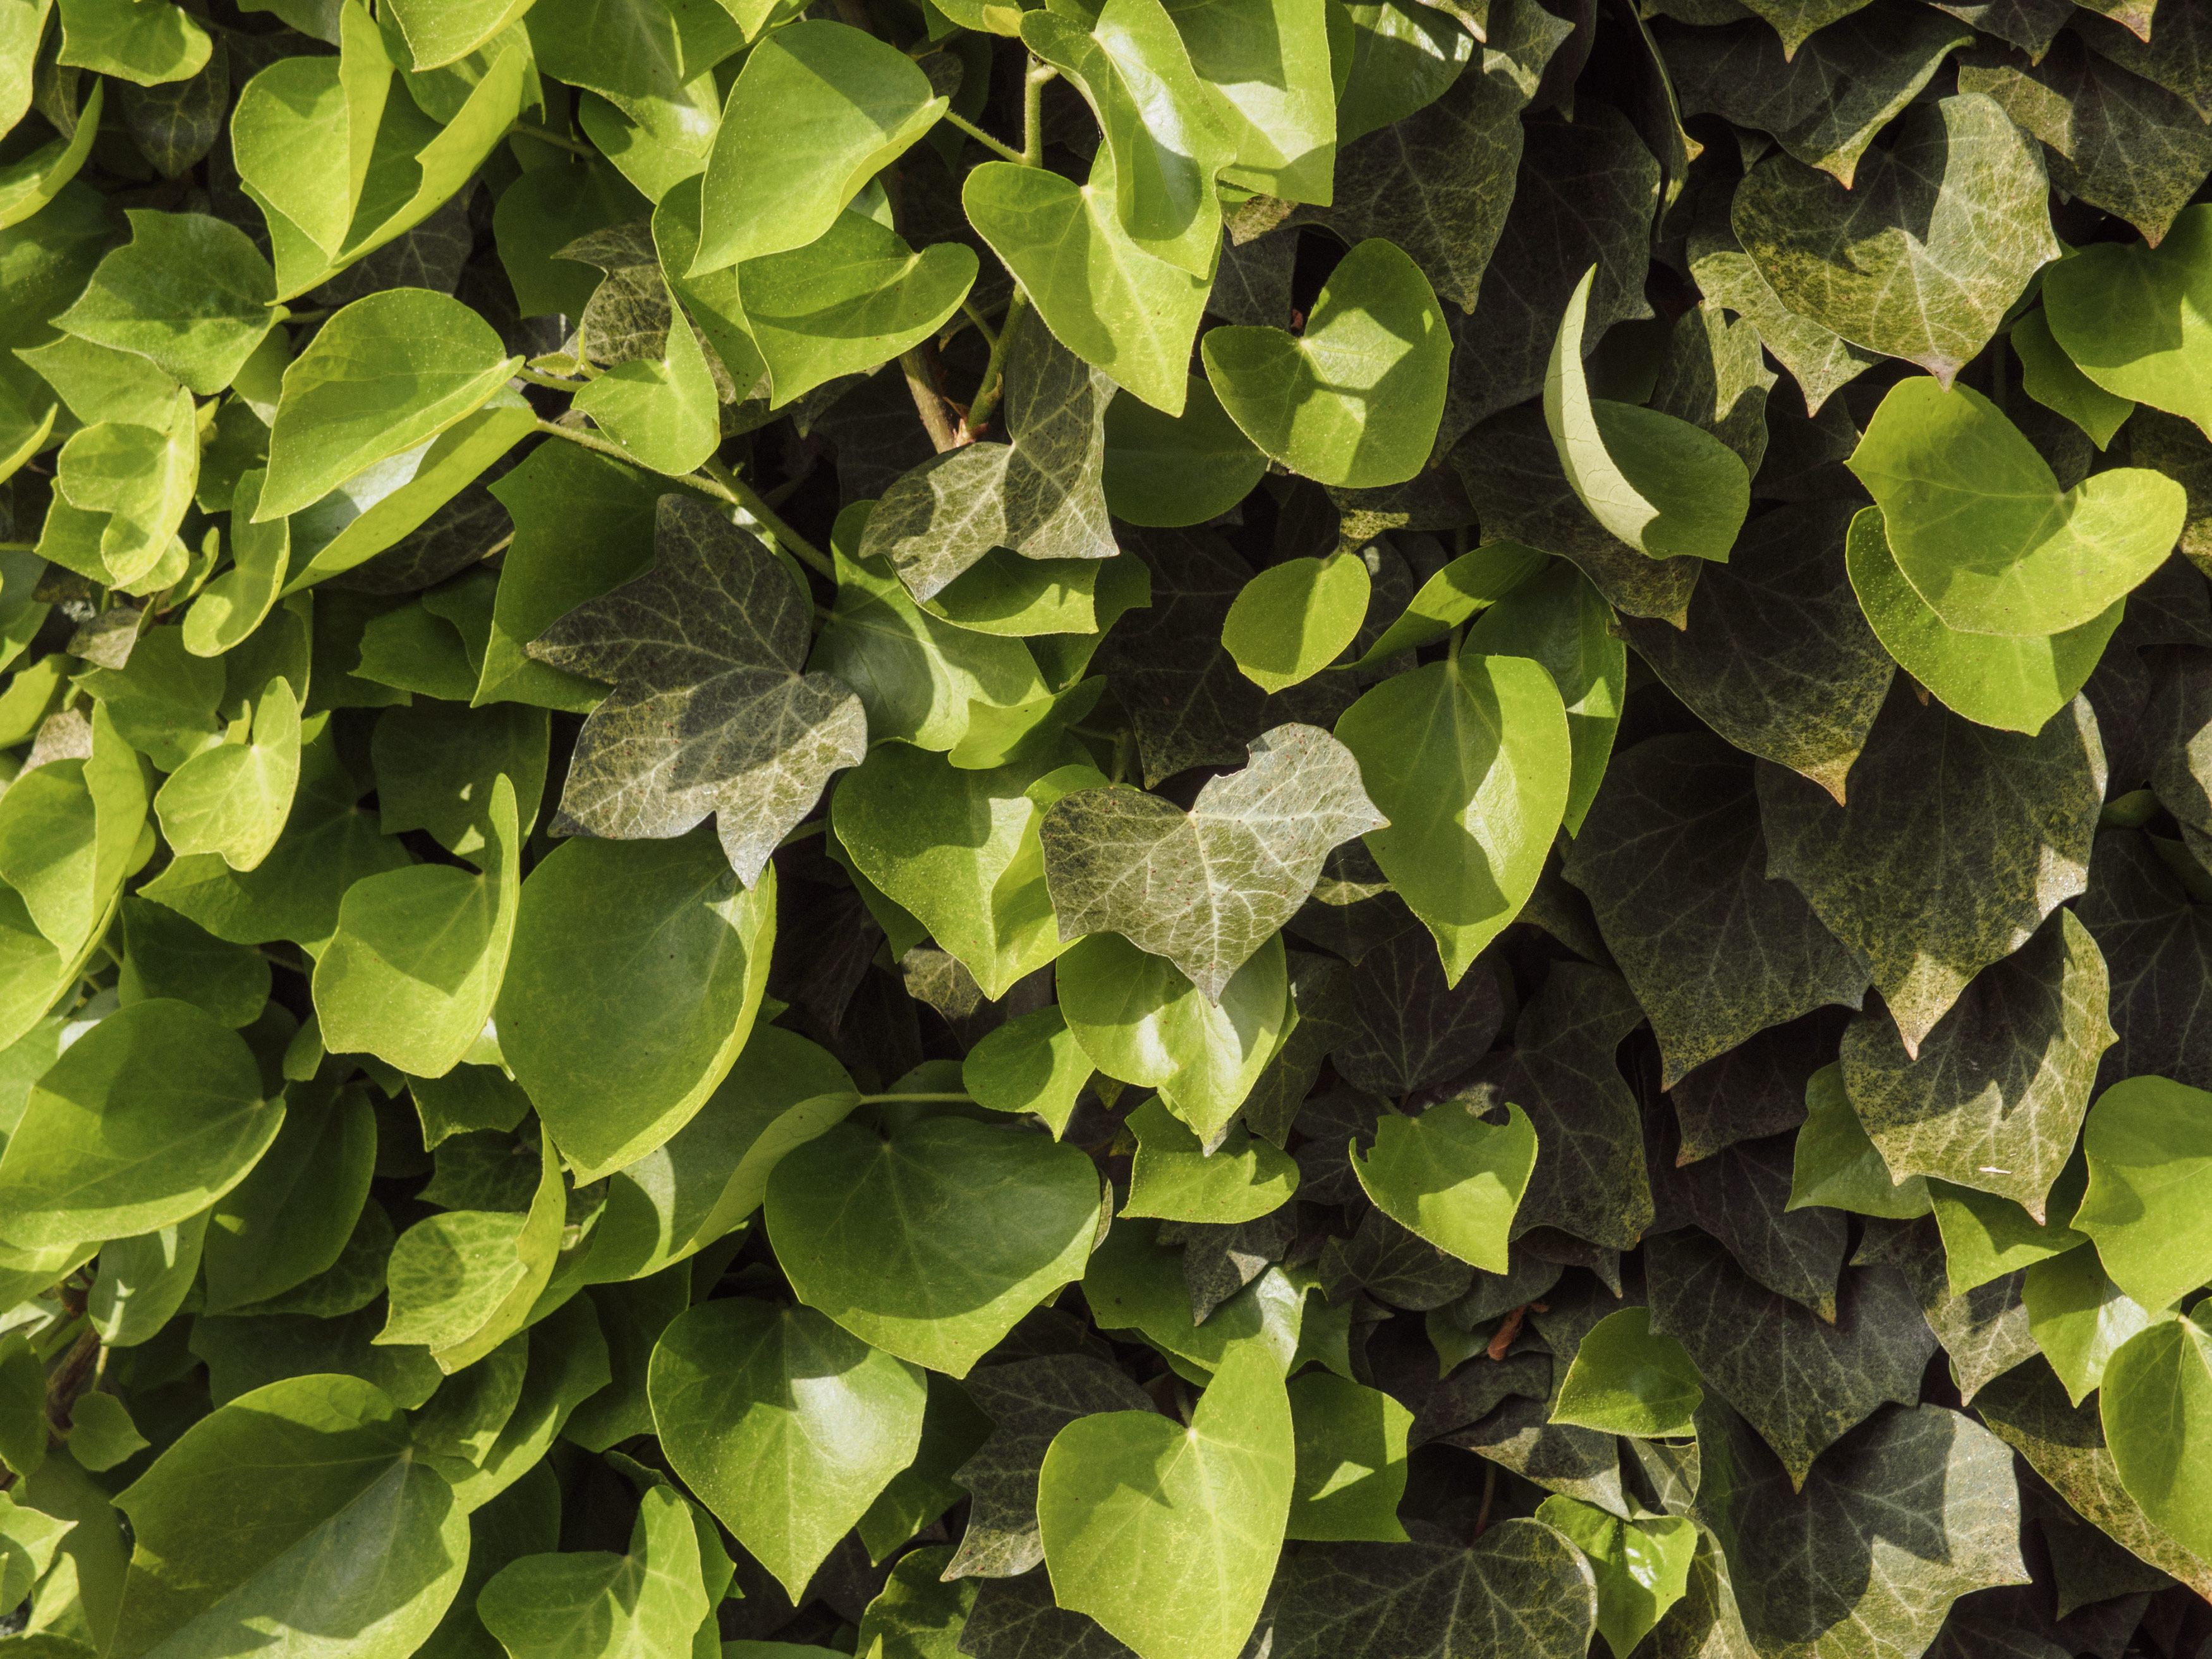 Free Image: Green leaves background | Libreshot Public Domain Photos